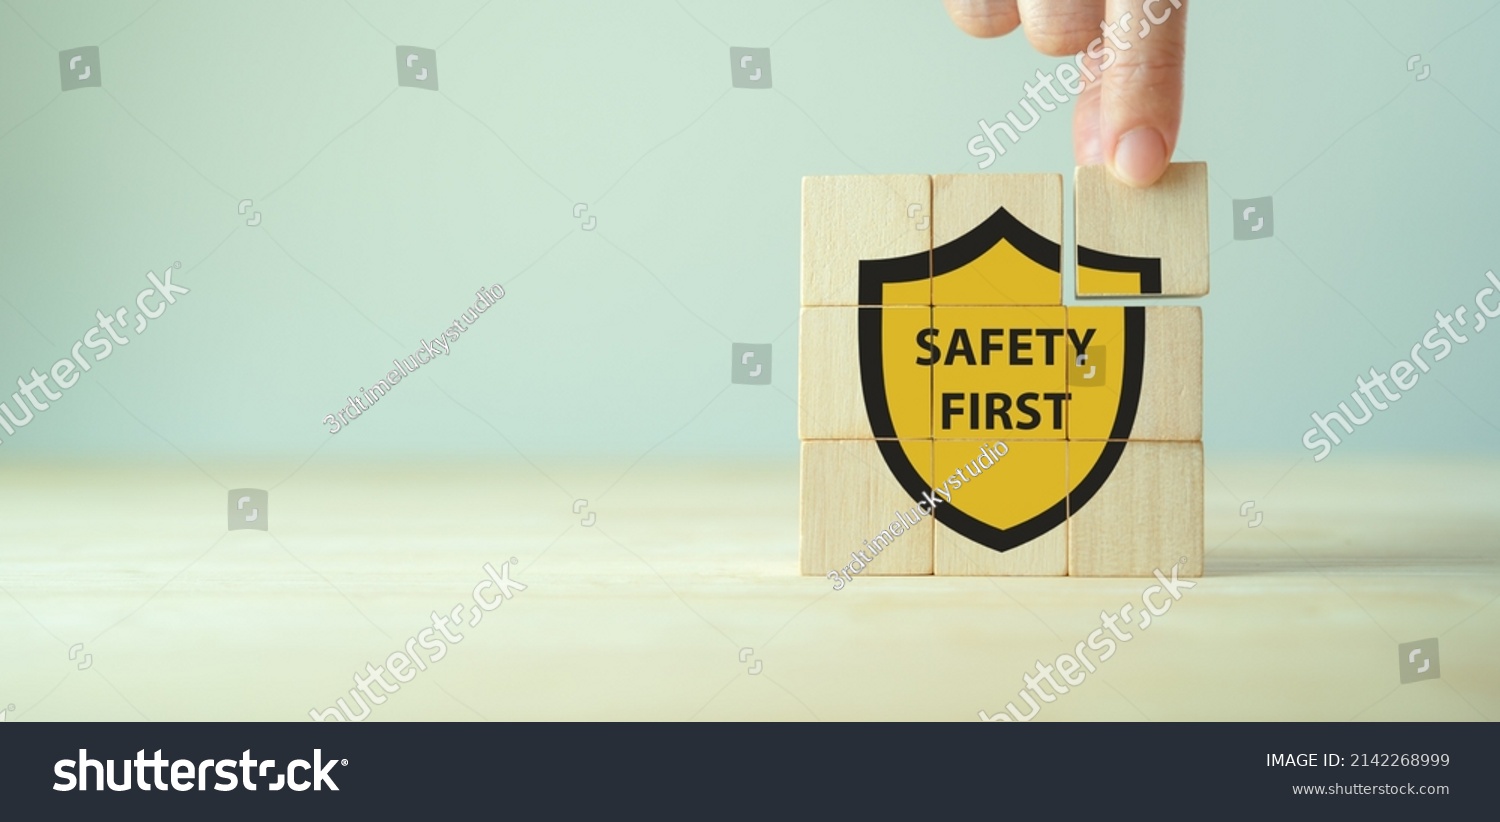 Safety first symbols, work safety, caution work hazards, danger surveillance, zero accident concept. Wooden cubes with smart grey background. Employees safety awareness at workplace. Safety banner. #2142268999